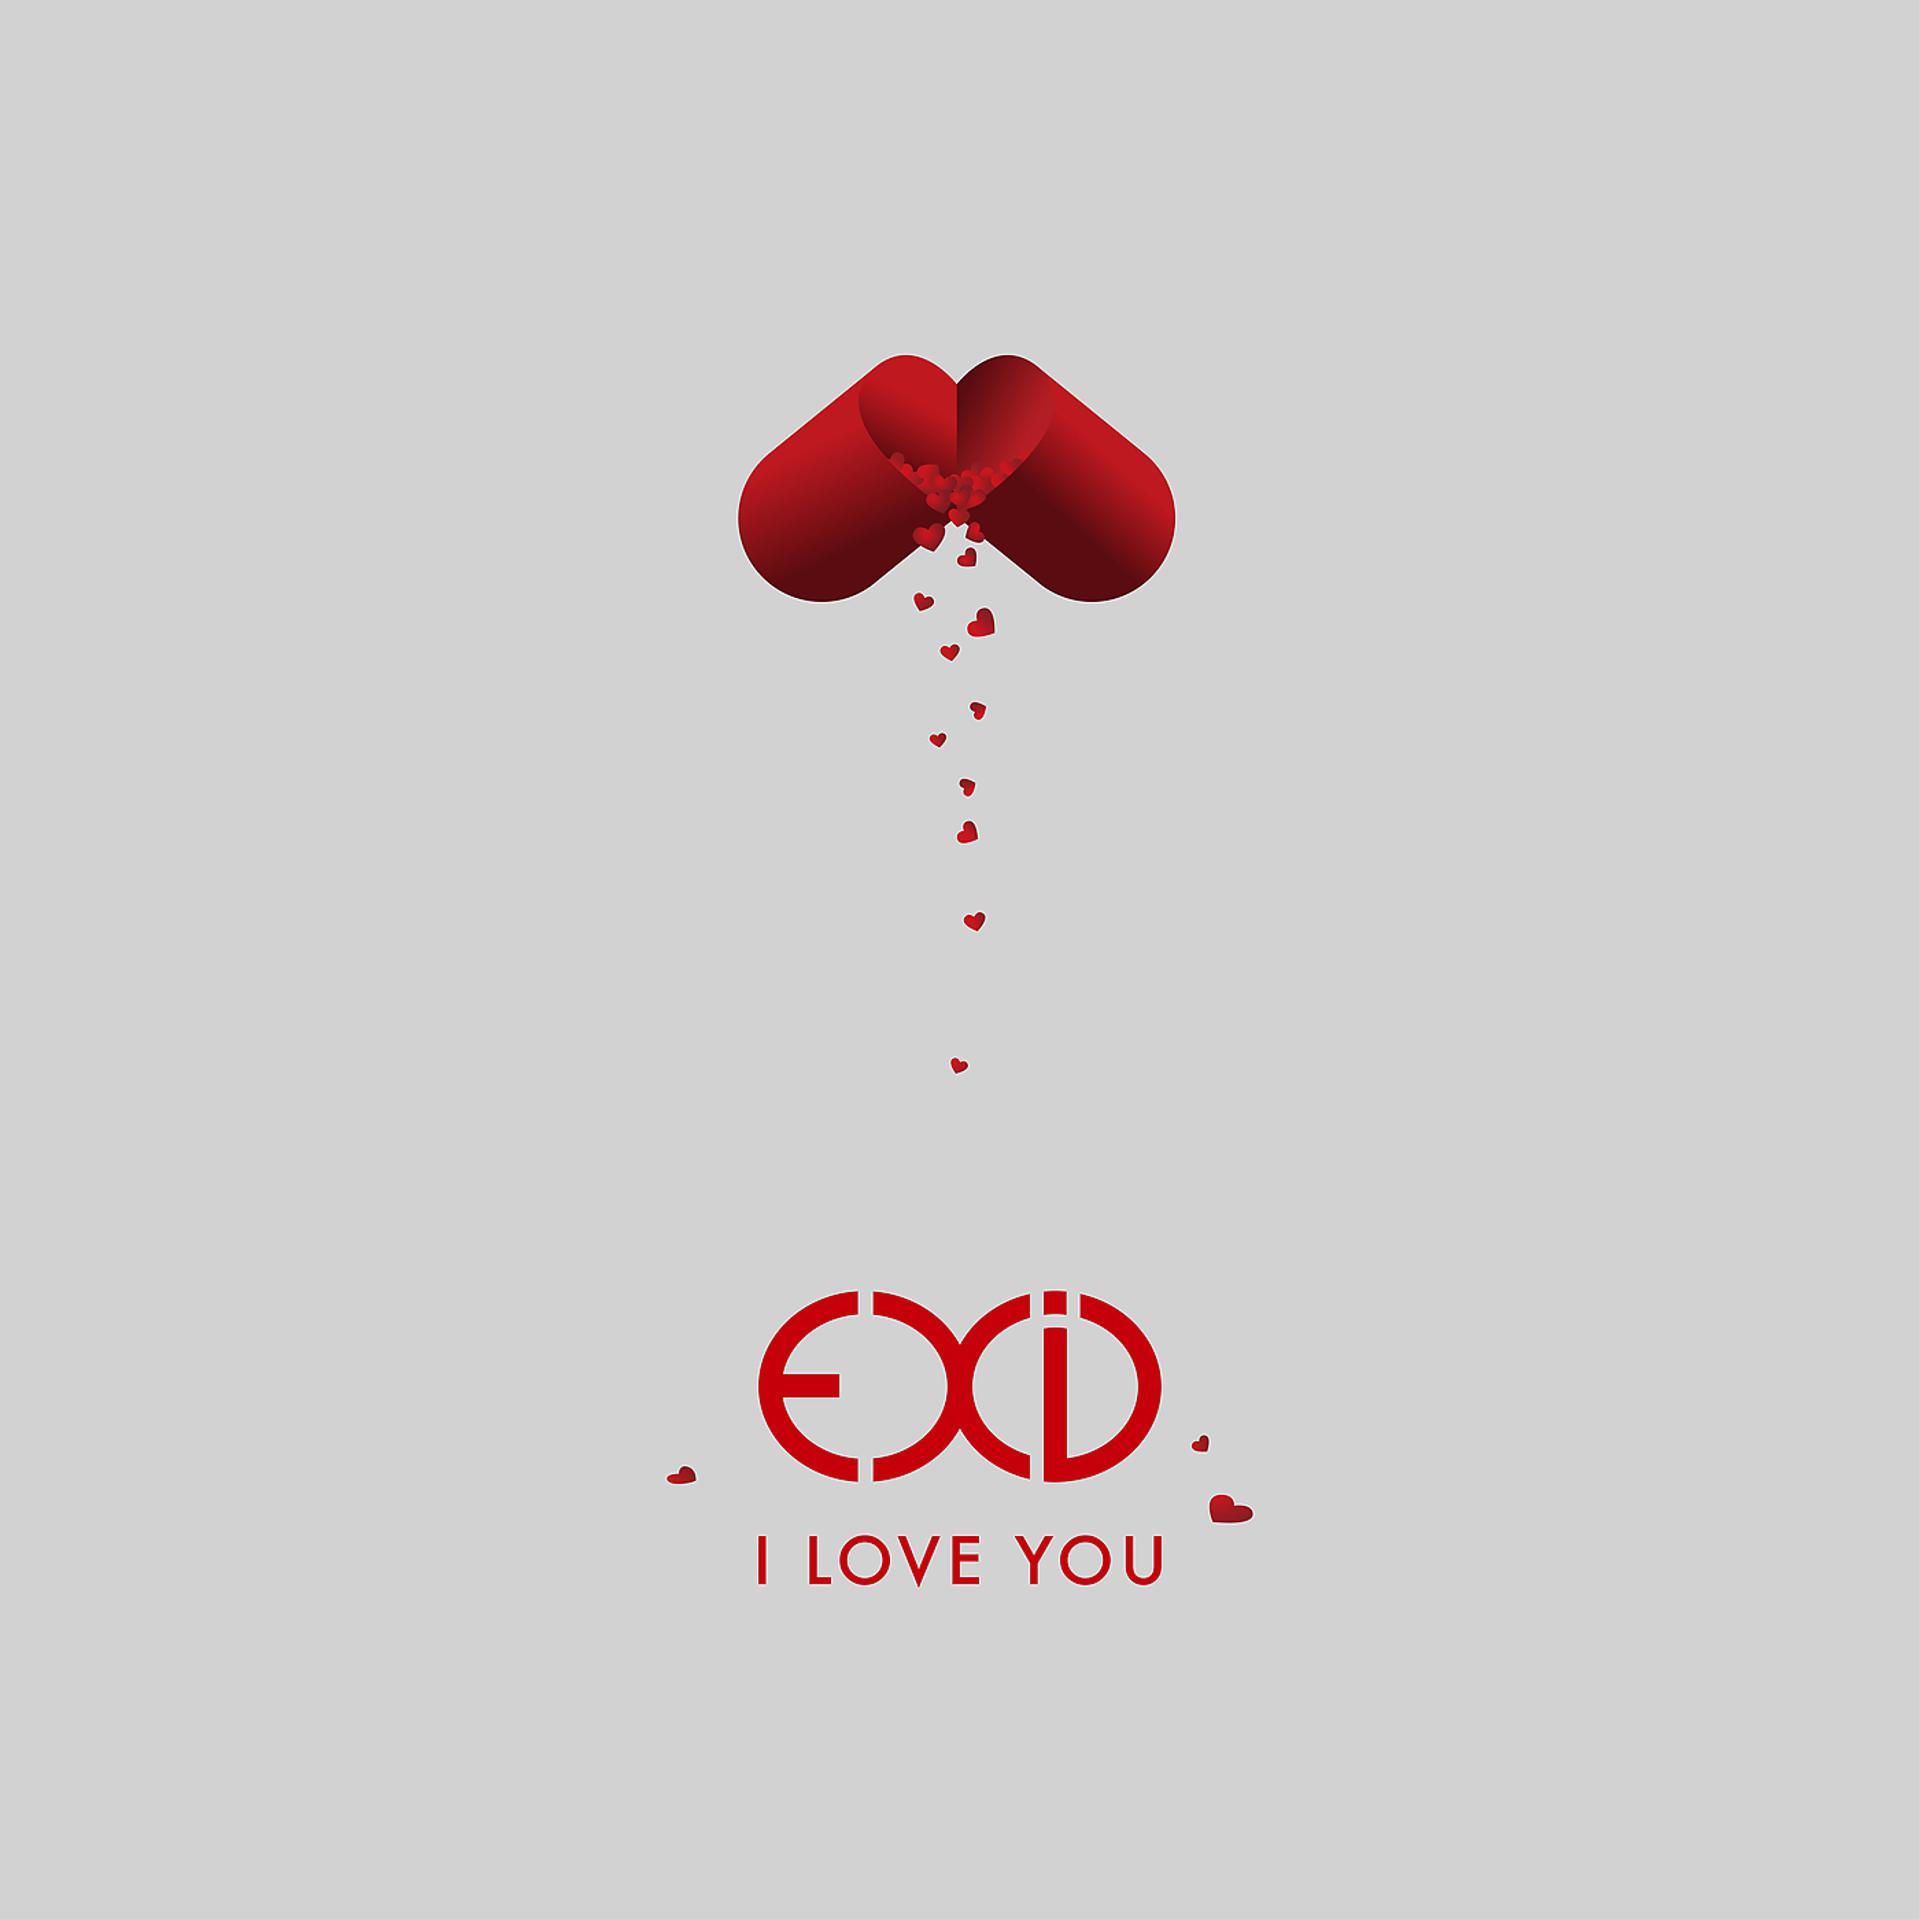 Ю лов слушать. I Love you. EXID I Love you. EXID iloveyou. I Love обложка.